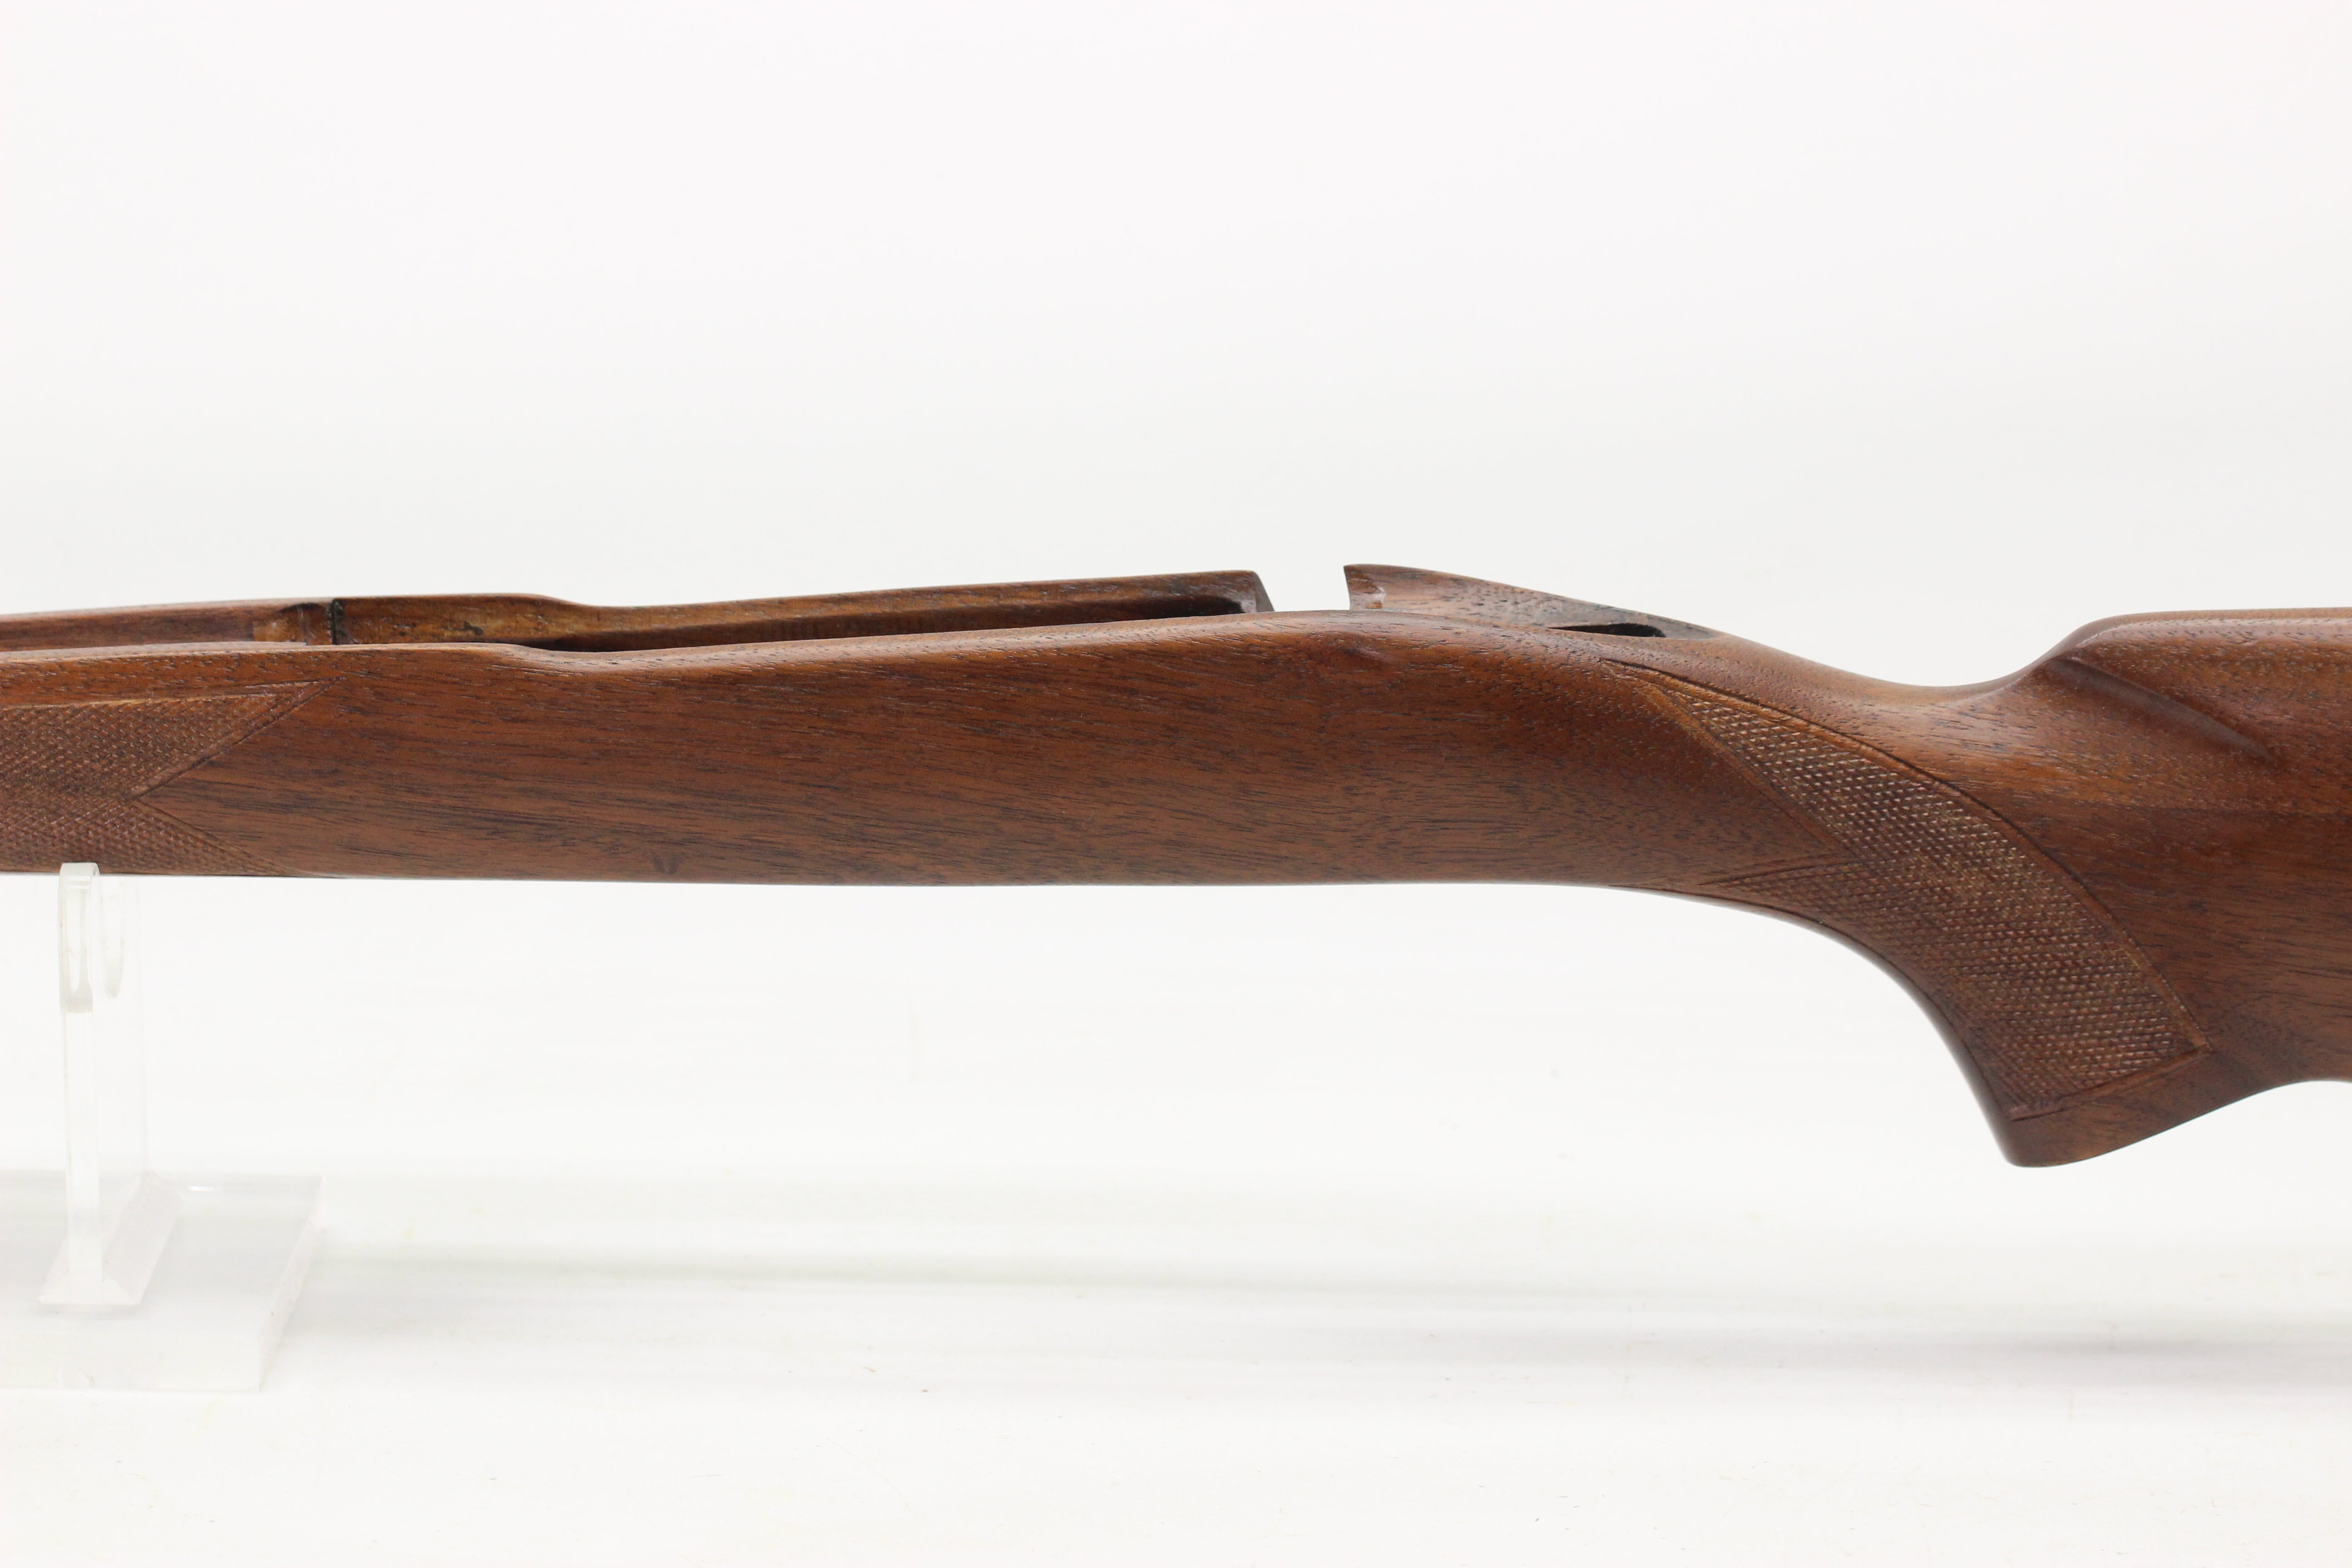 1959-1961 Monte Carlo Featherweight Rifle Stock